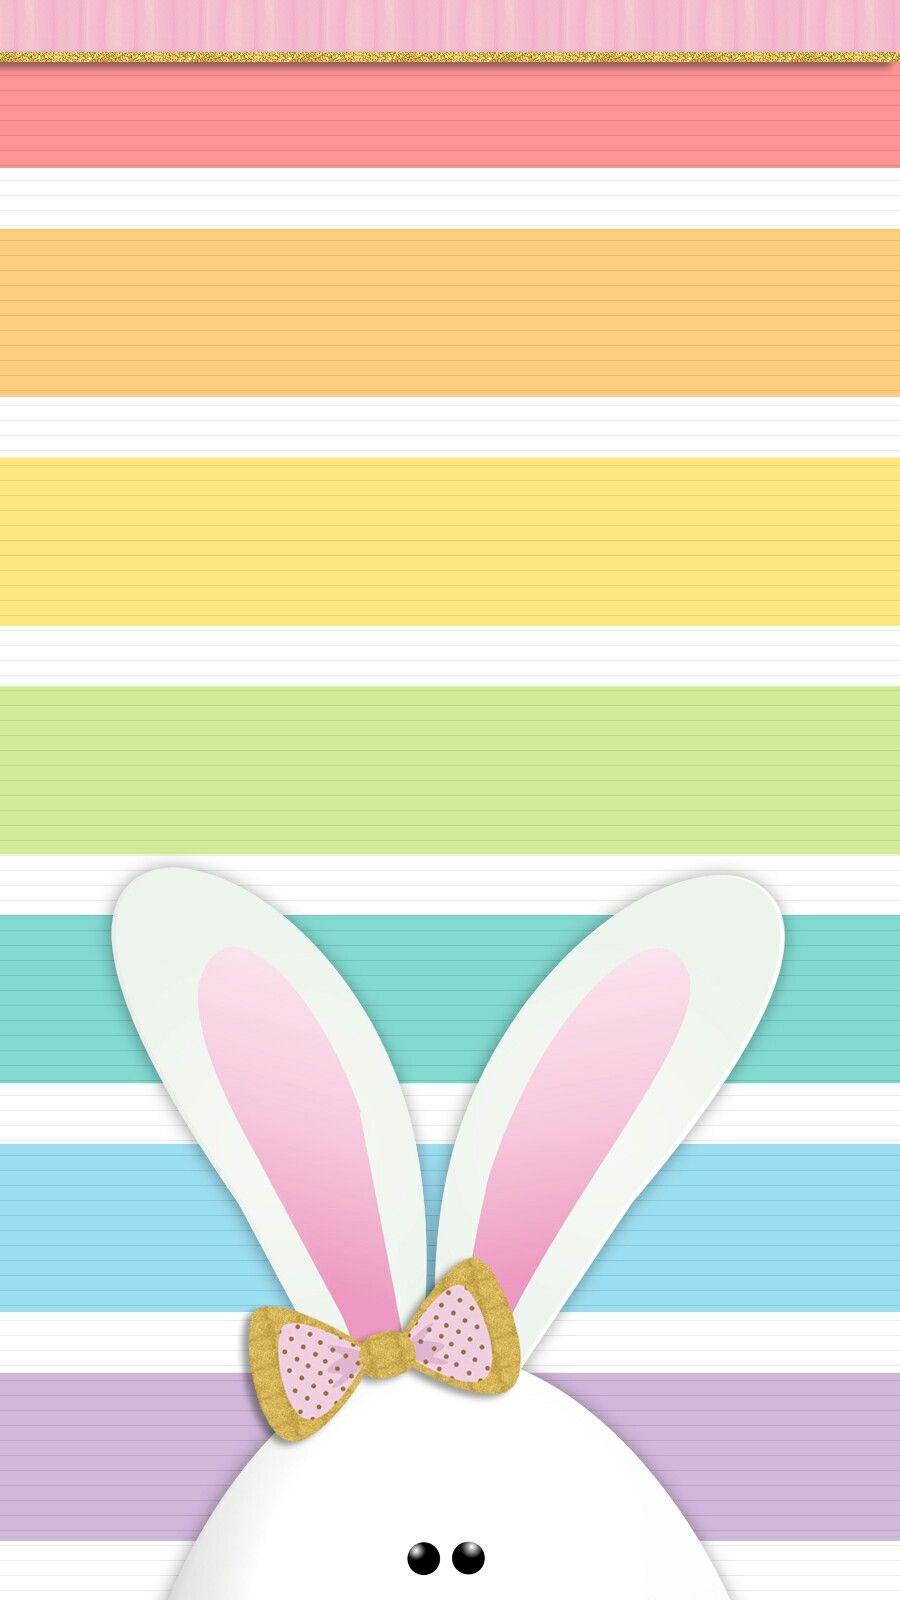 Easter bunny wallpaper iphone. Easter wallpaper, Happy easter wallpaper, Bunny wallpaper